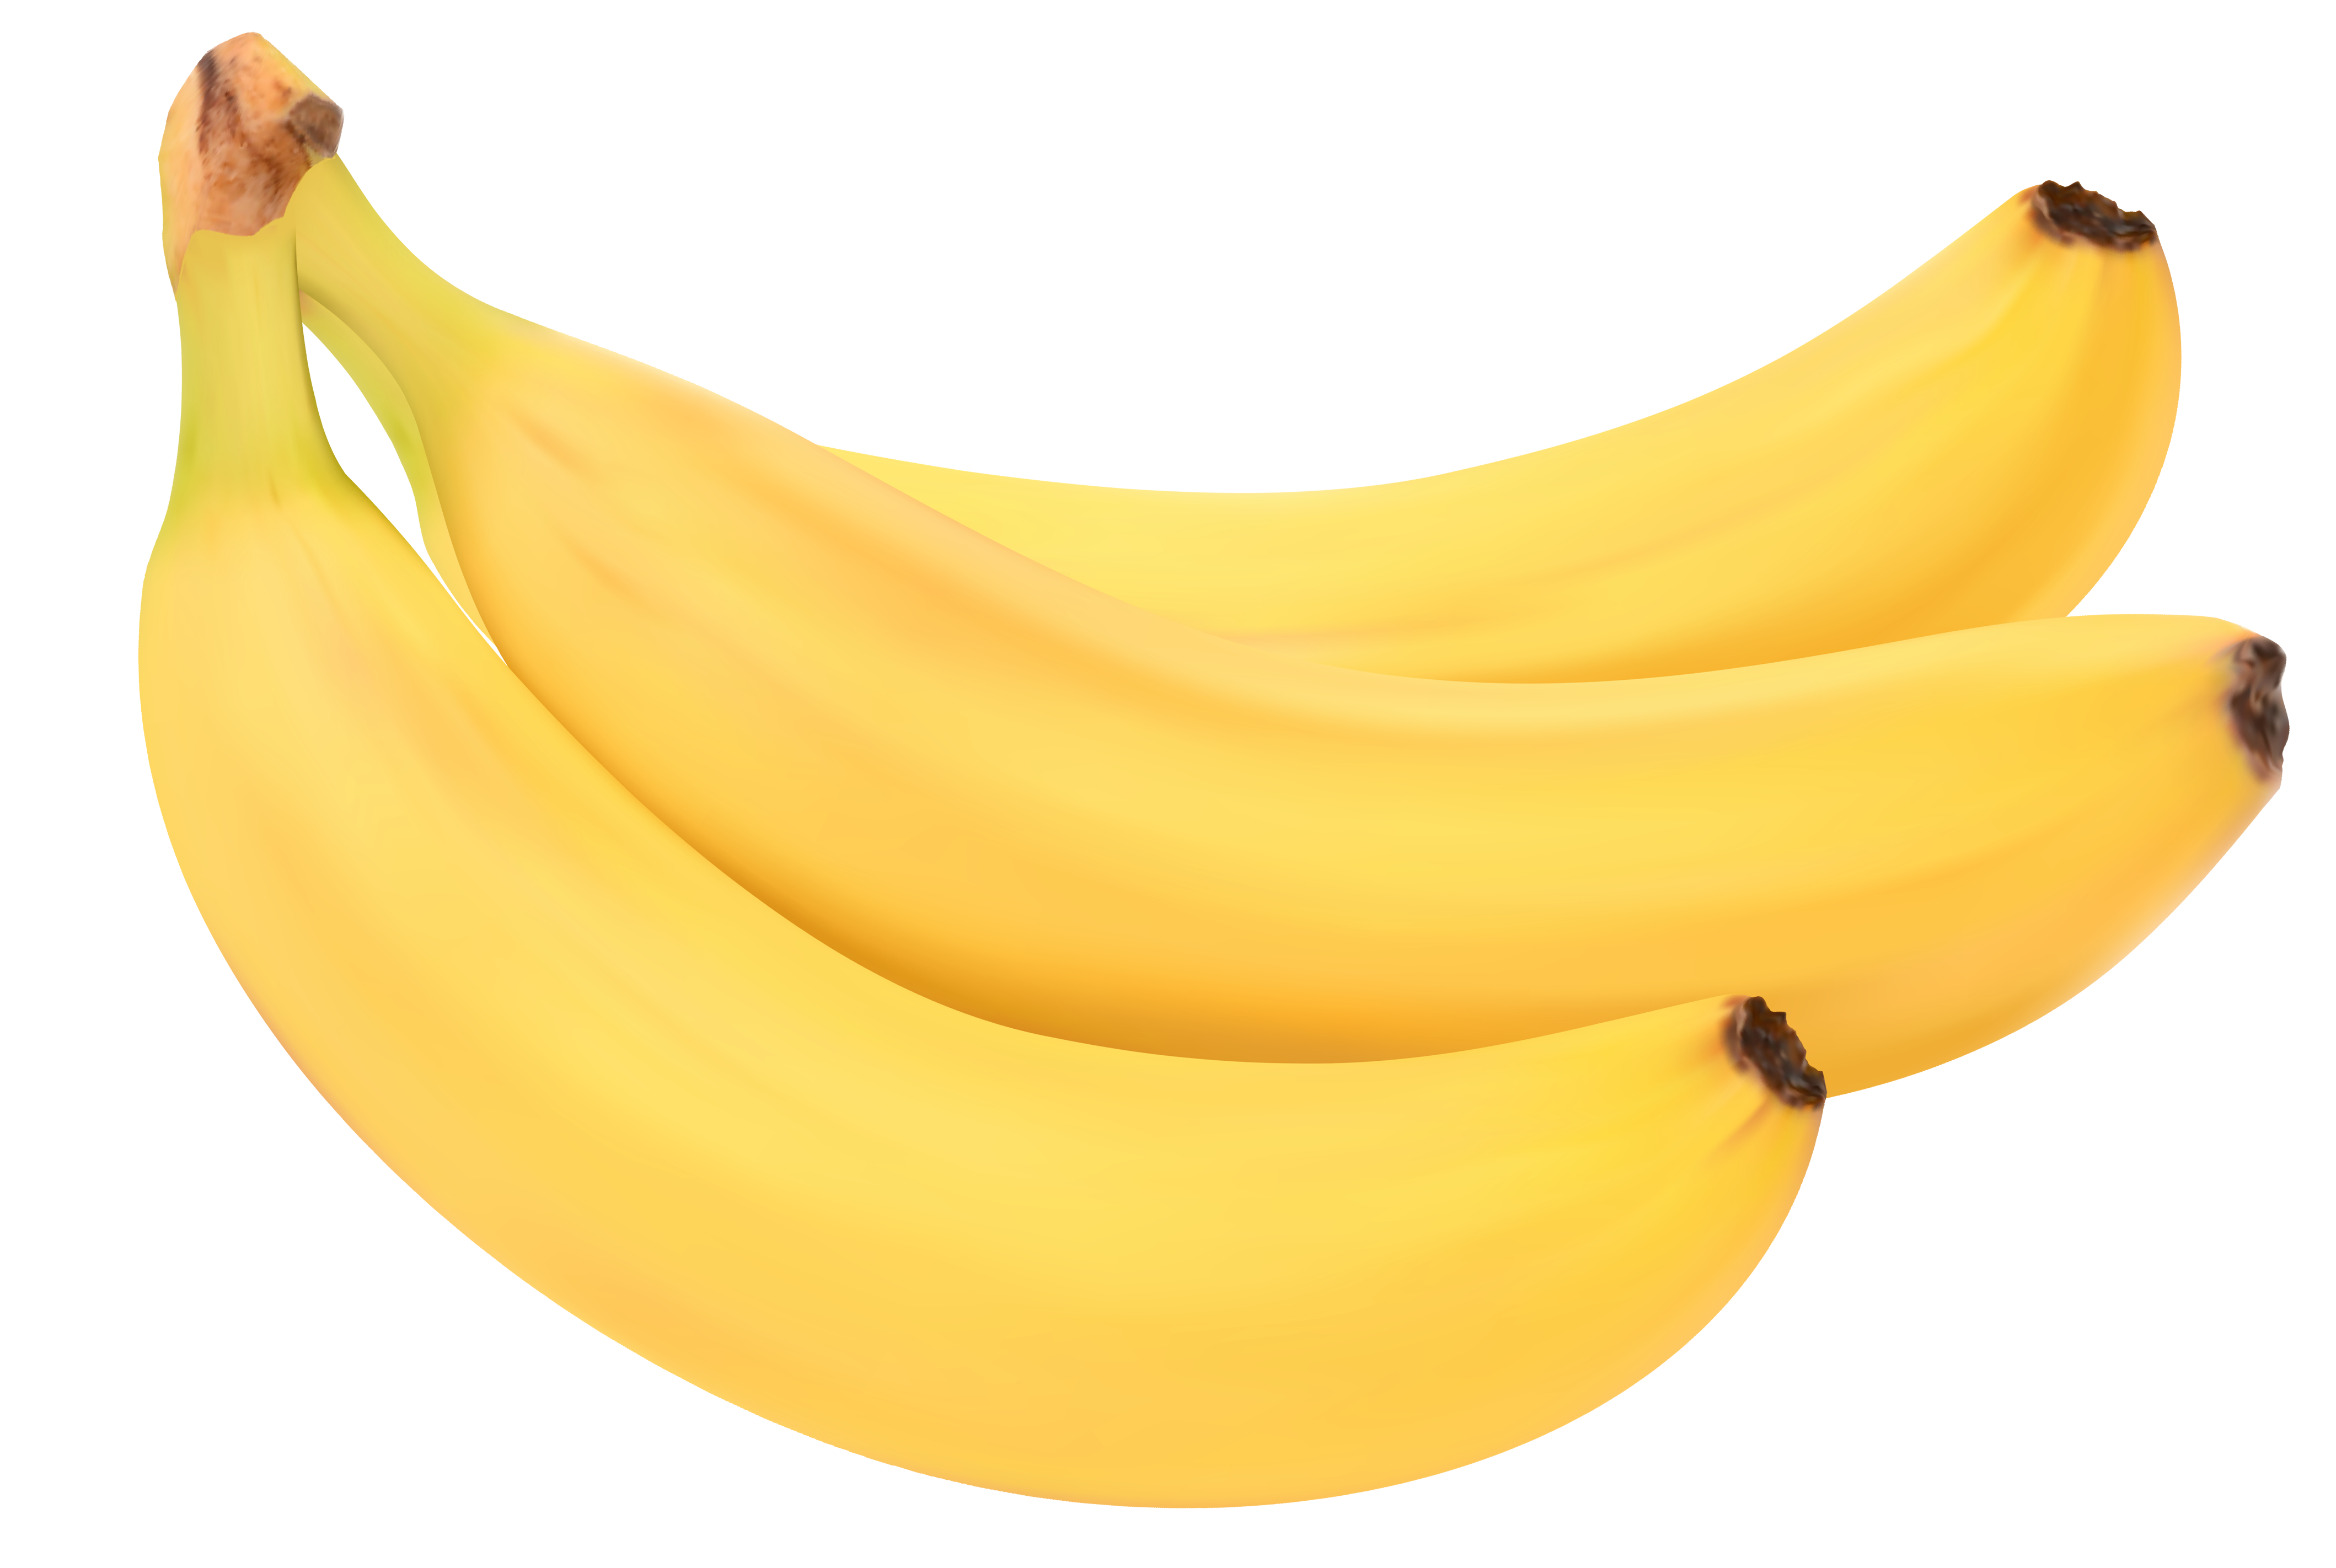 Banana sweet fruit